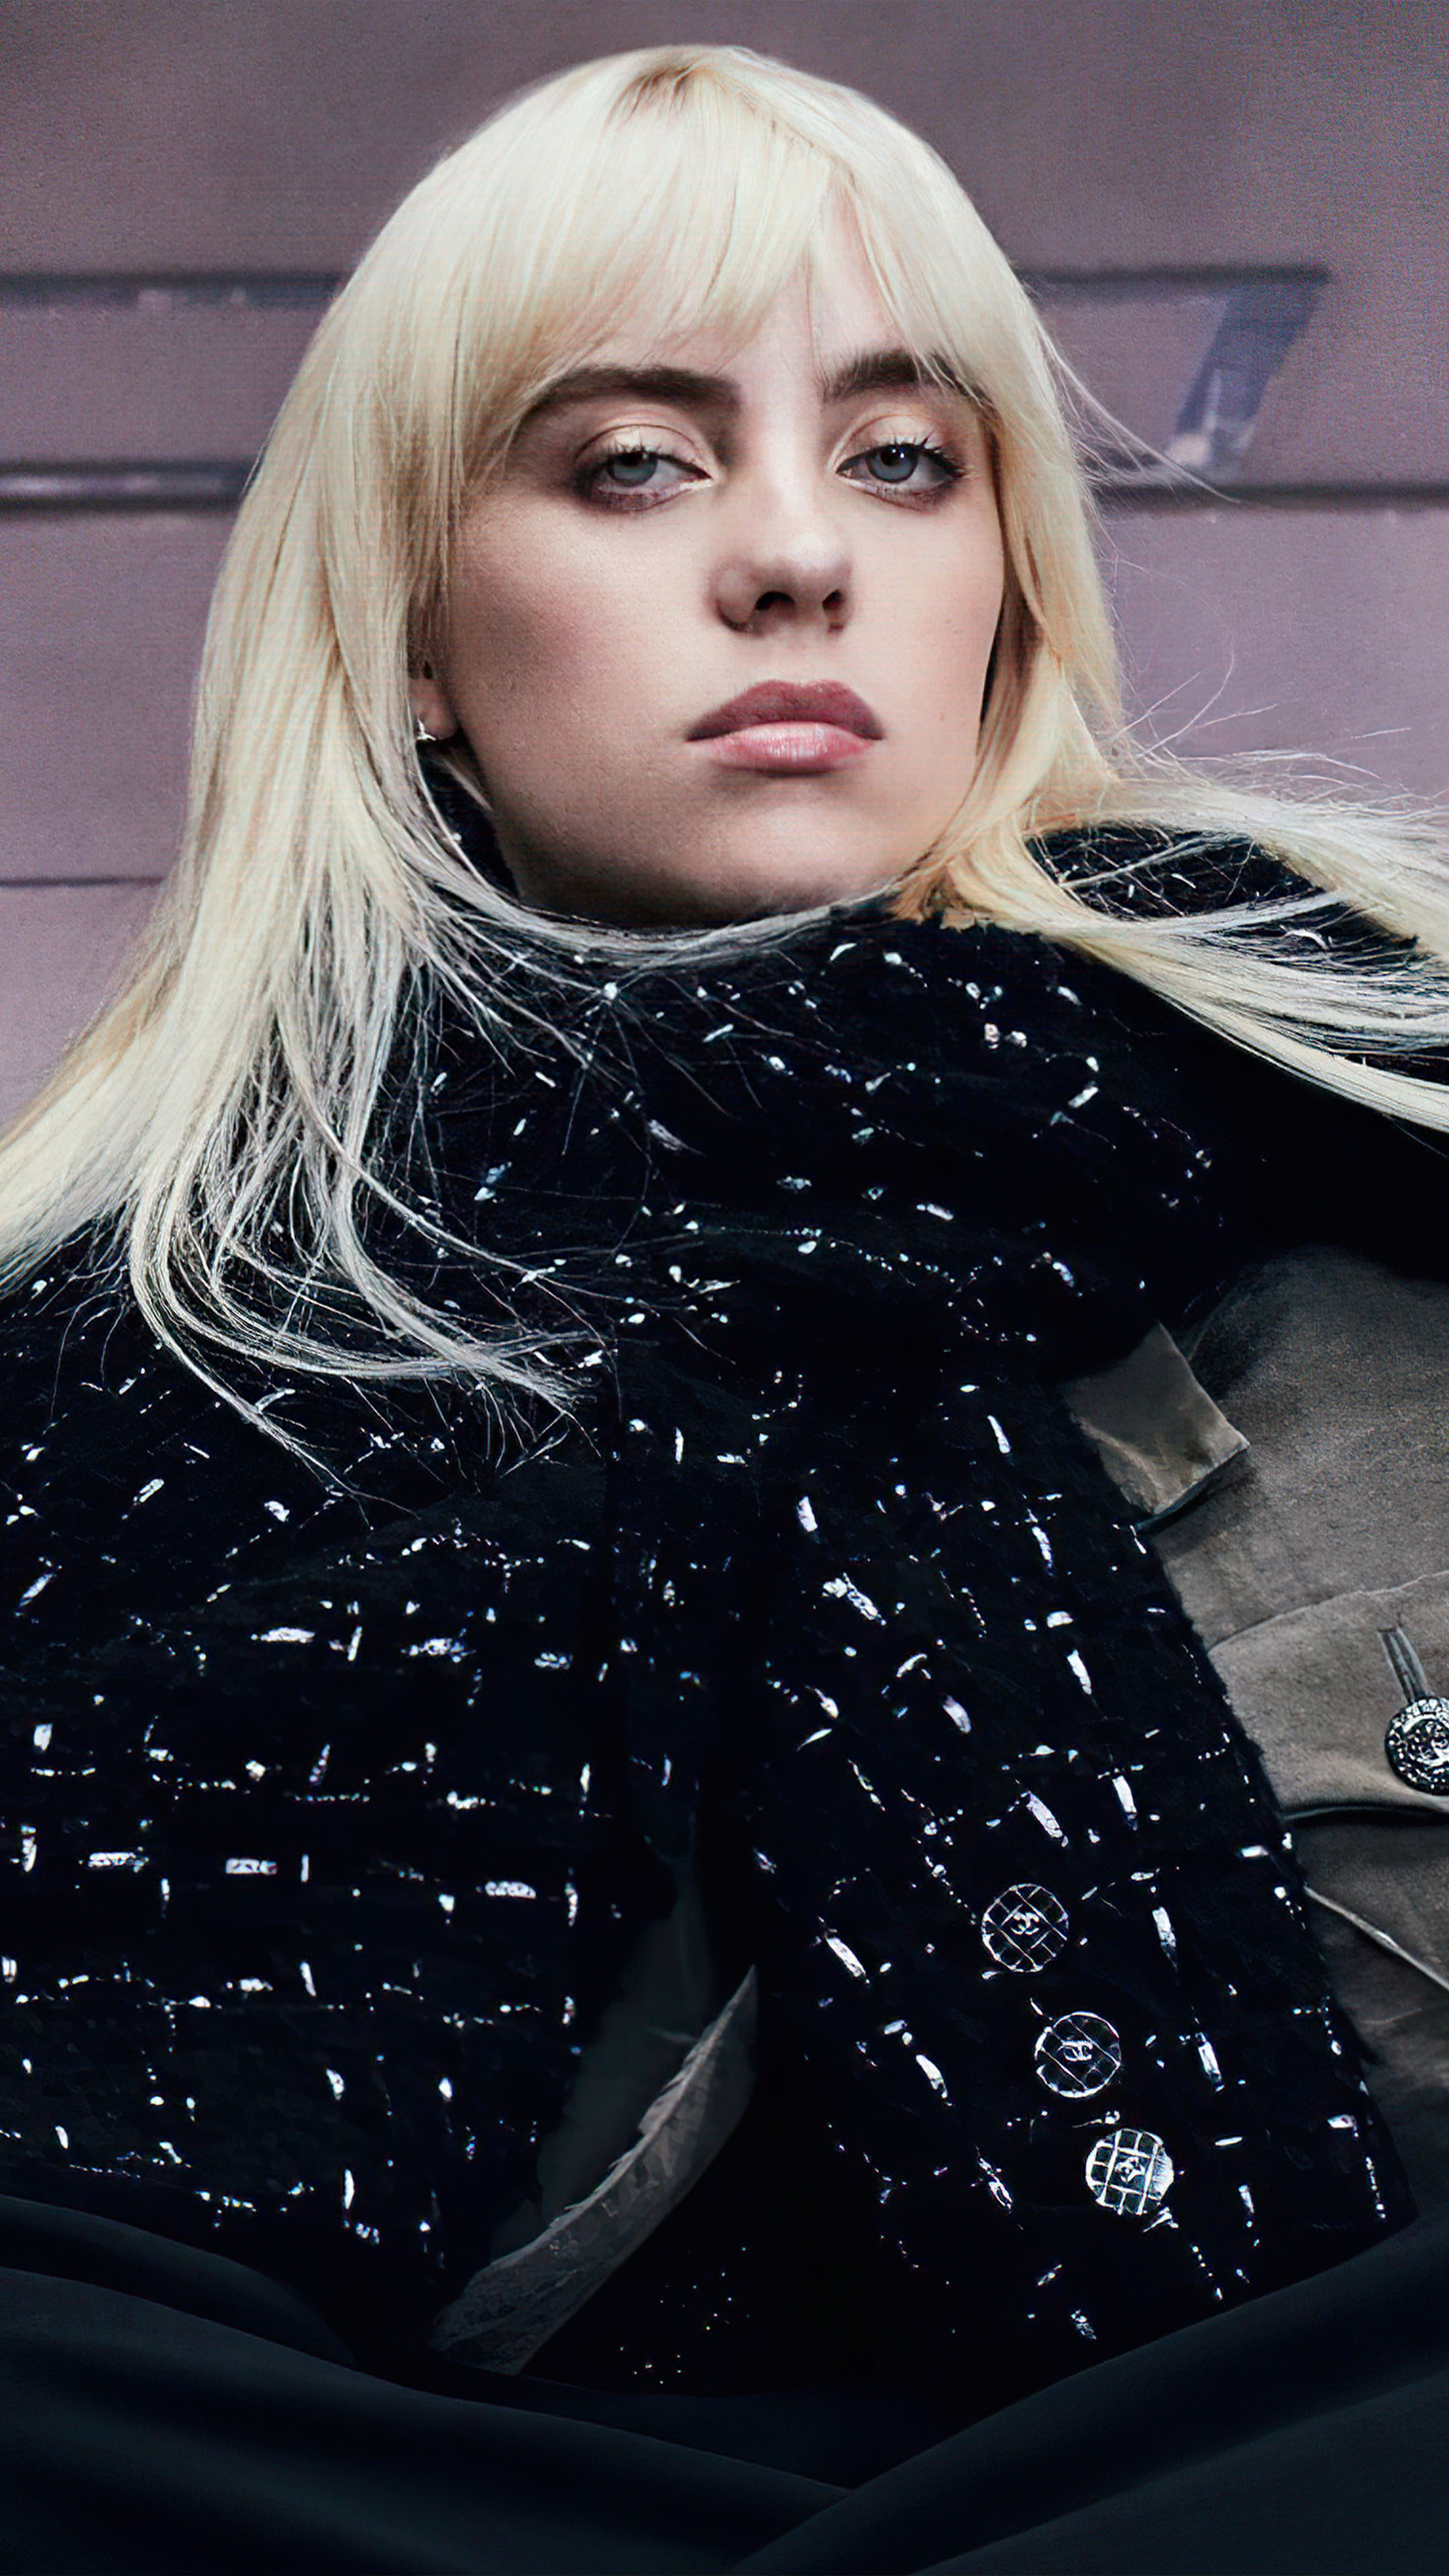 Billie Eilish In Black Dress Vogue Photohoot 4K Ultra HD Mobile Wallpaper